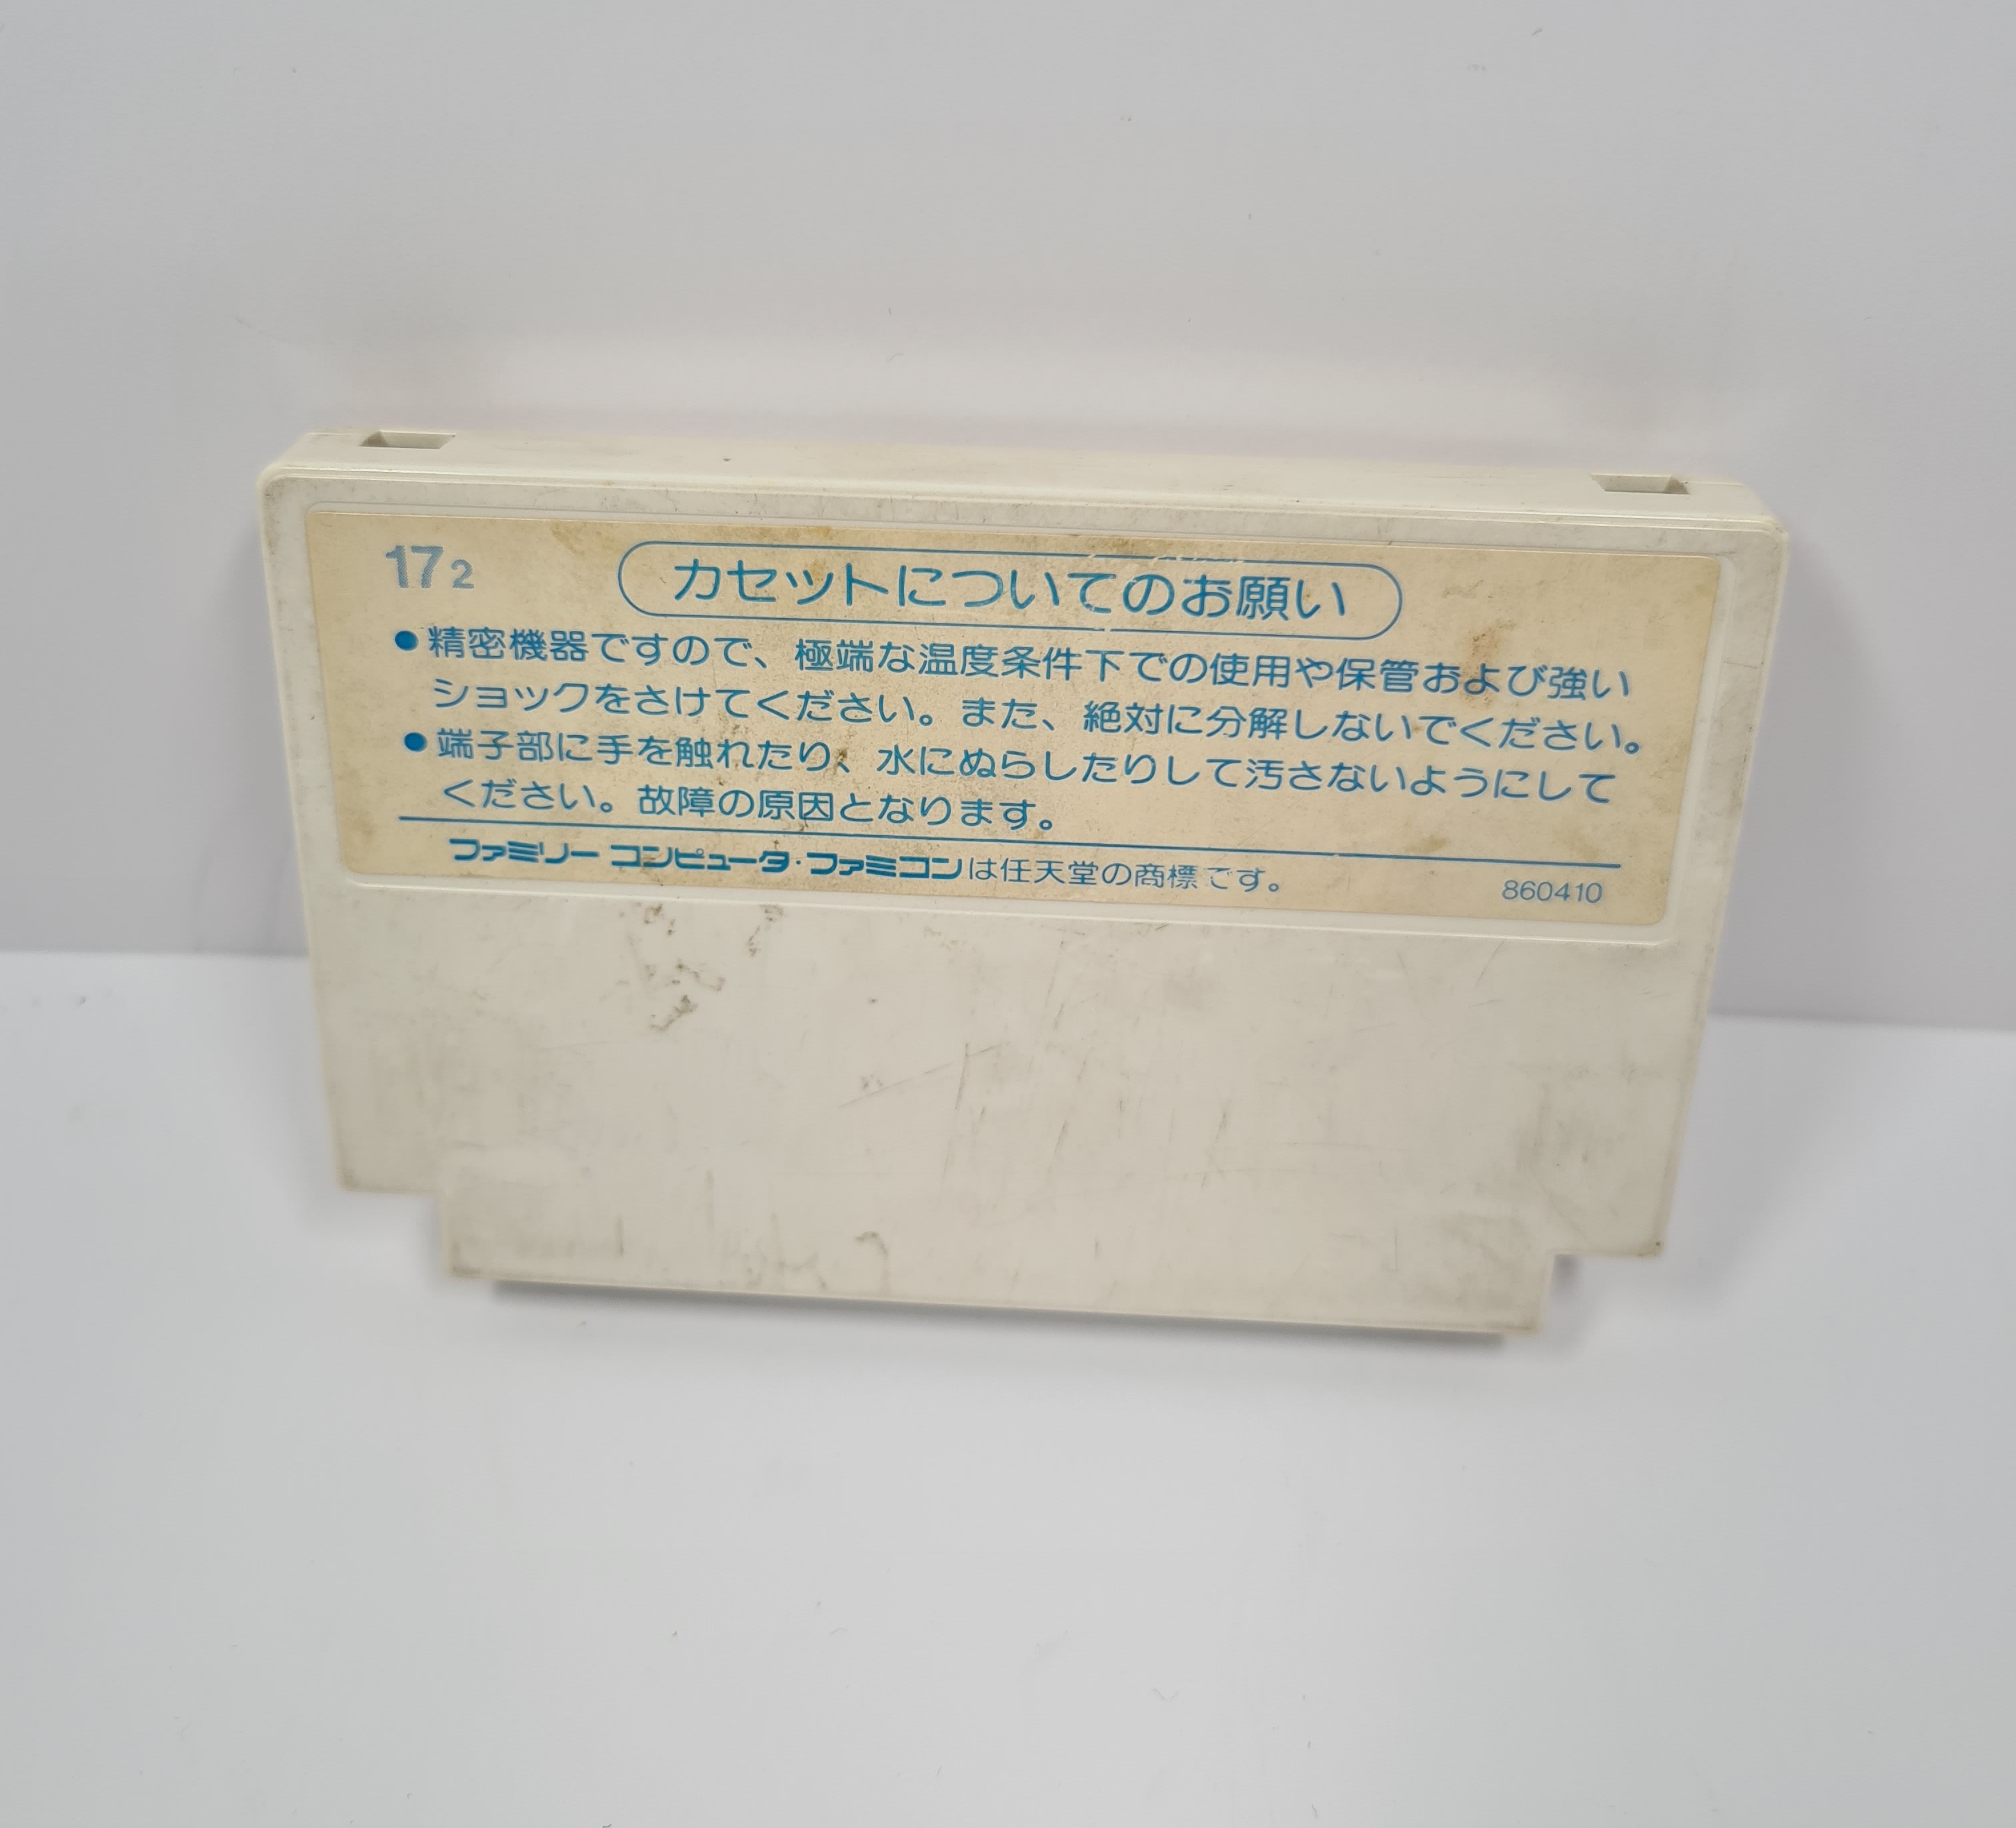 Takashi mester kalandsziget - Famicom - 2